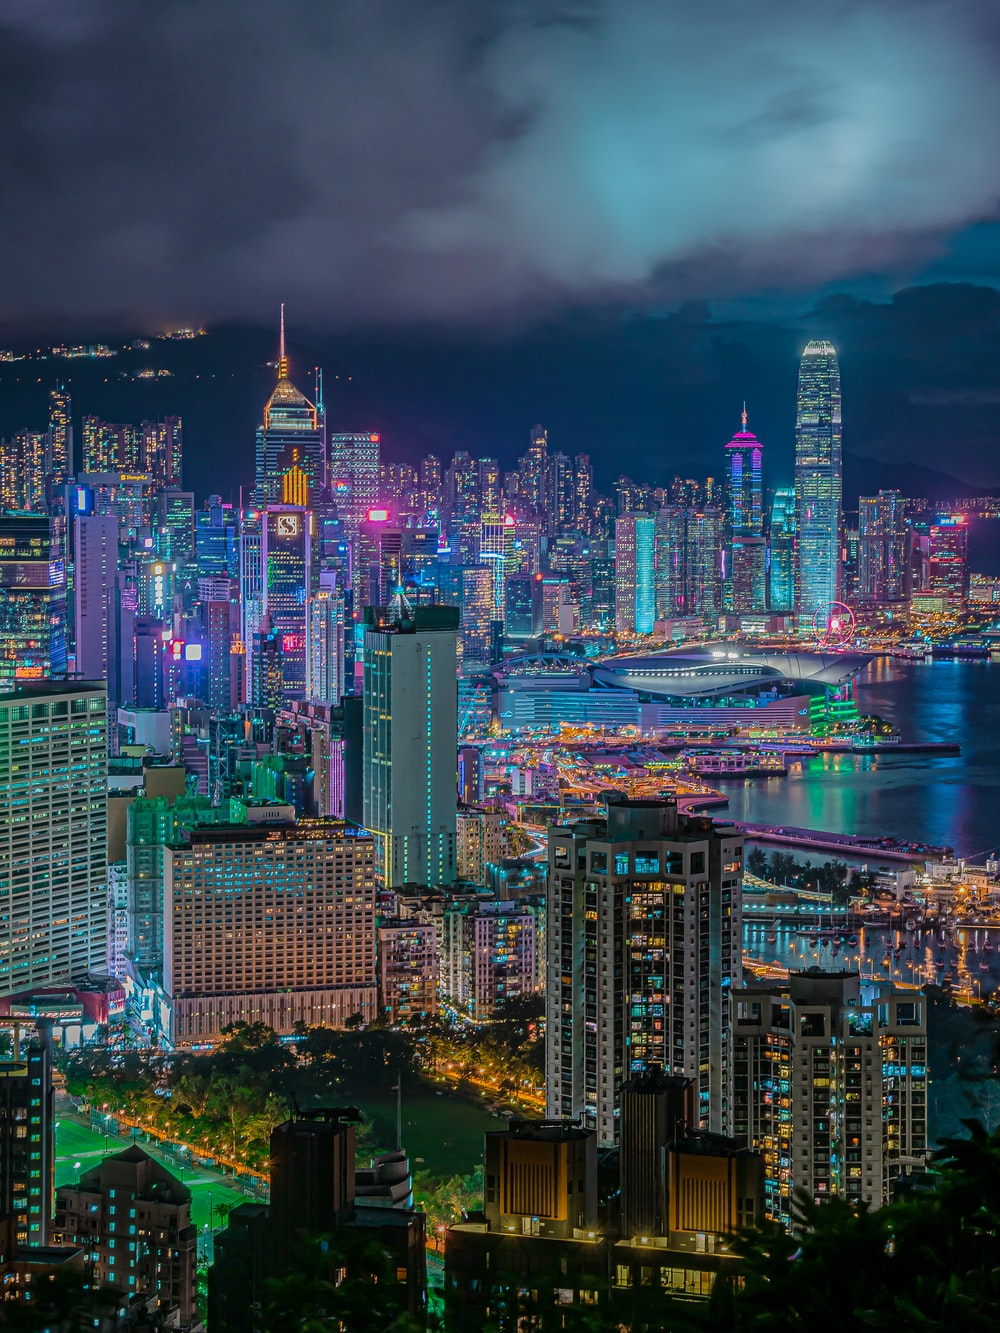 Hong Kong Night Picture. Download Free Image